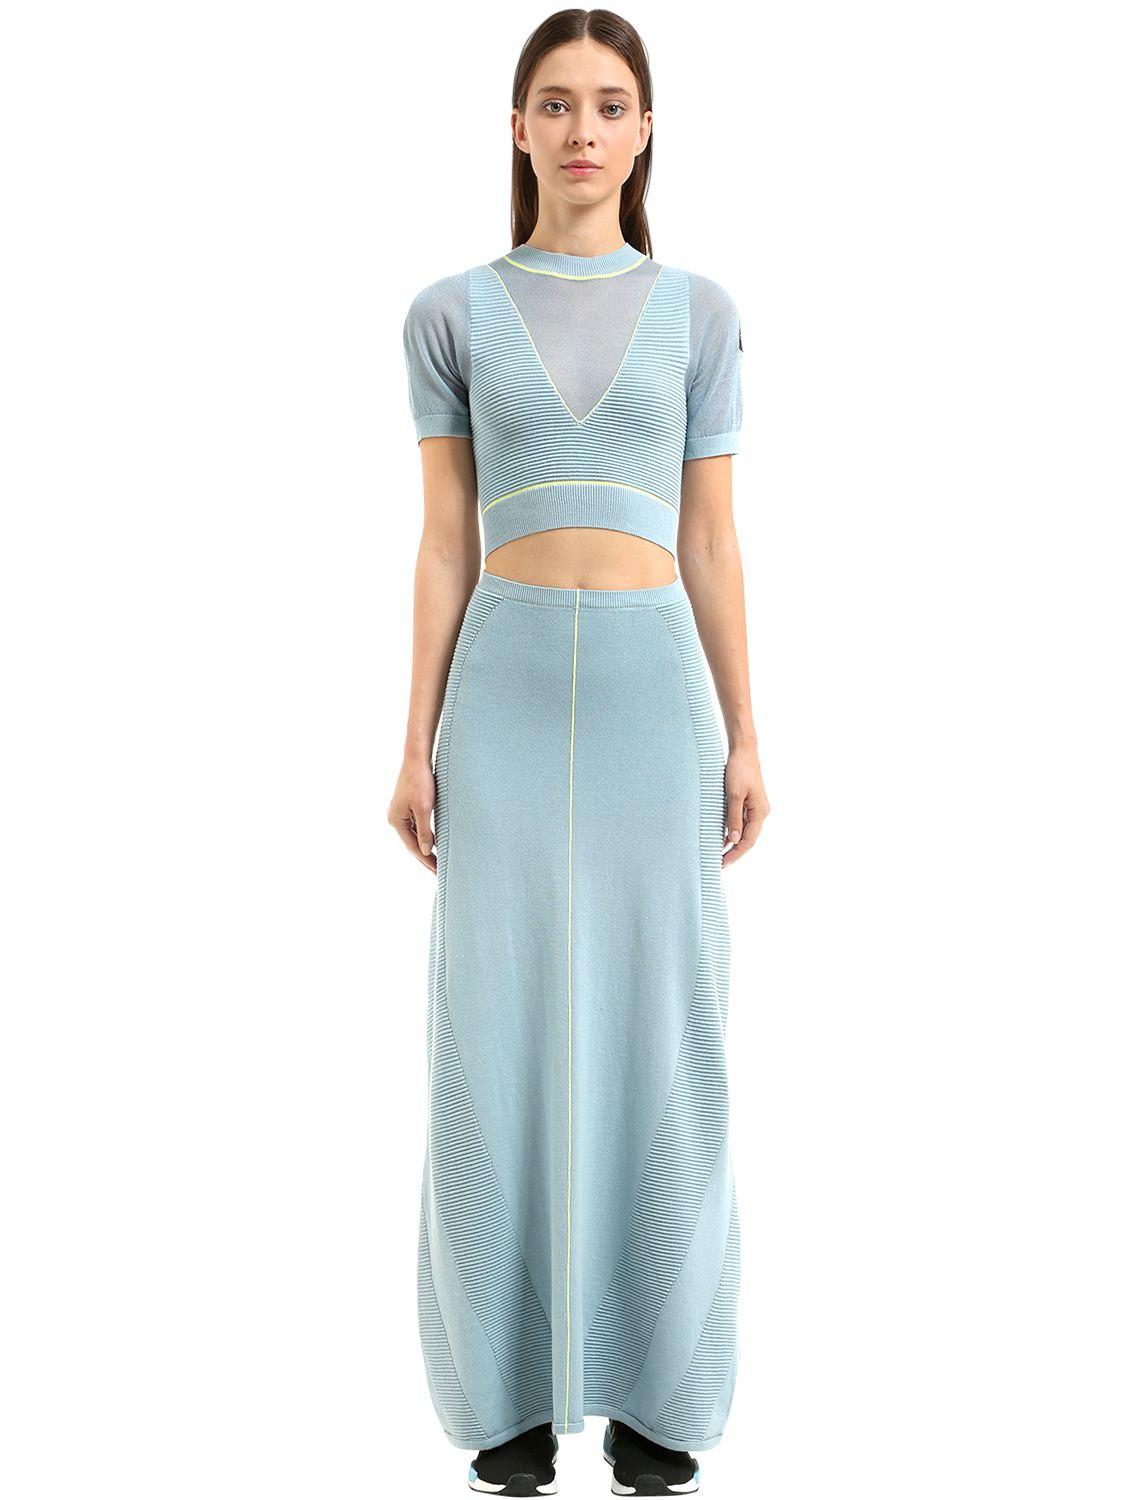 adidas Originals Eqt Cutout Cotton Knit Dress in Light Blue (Blue) - Lyst